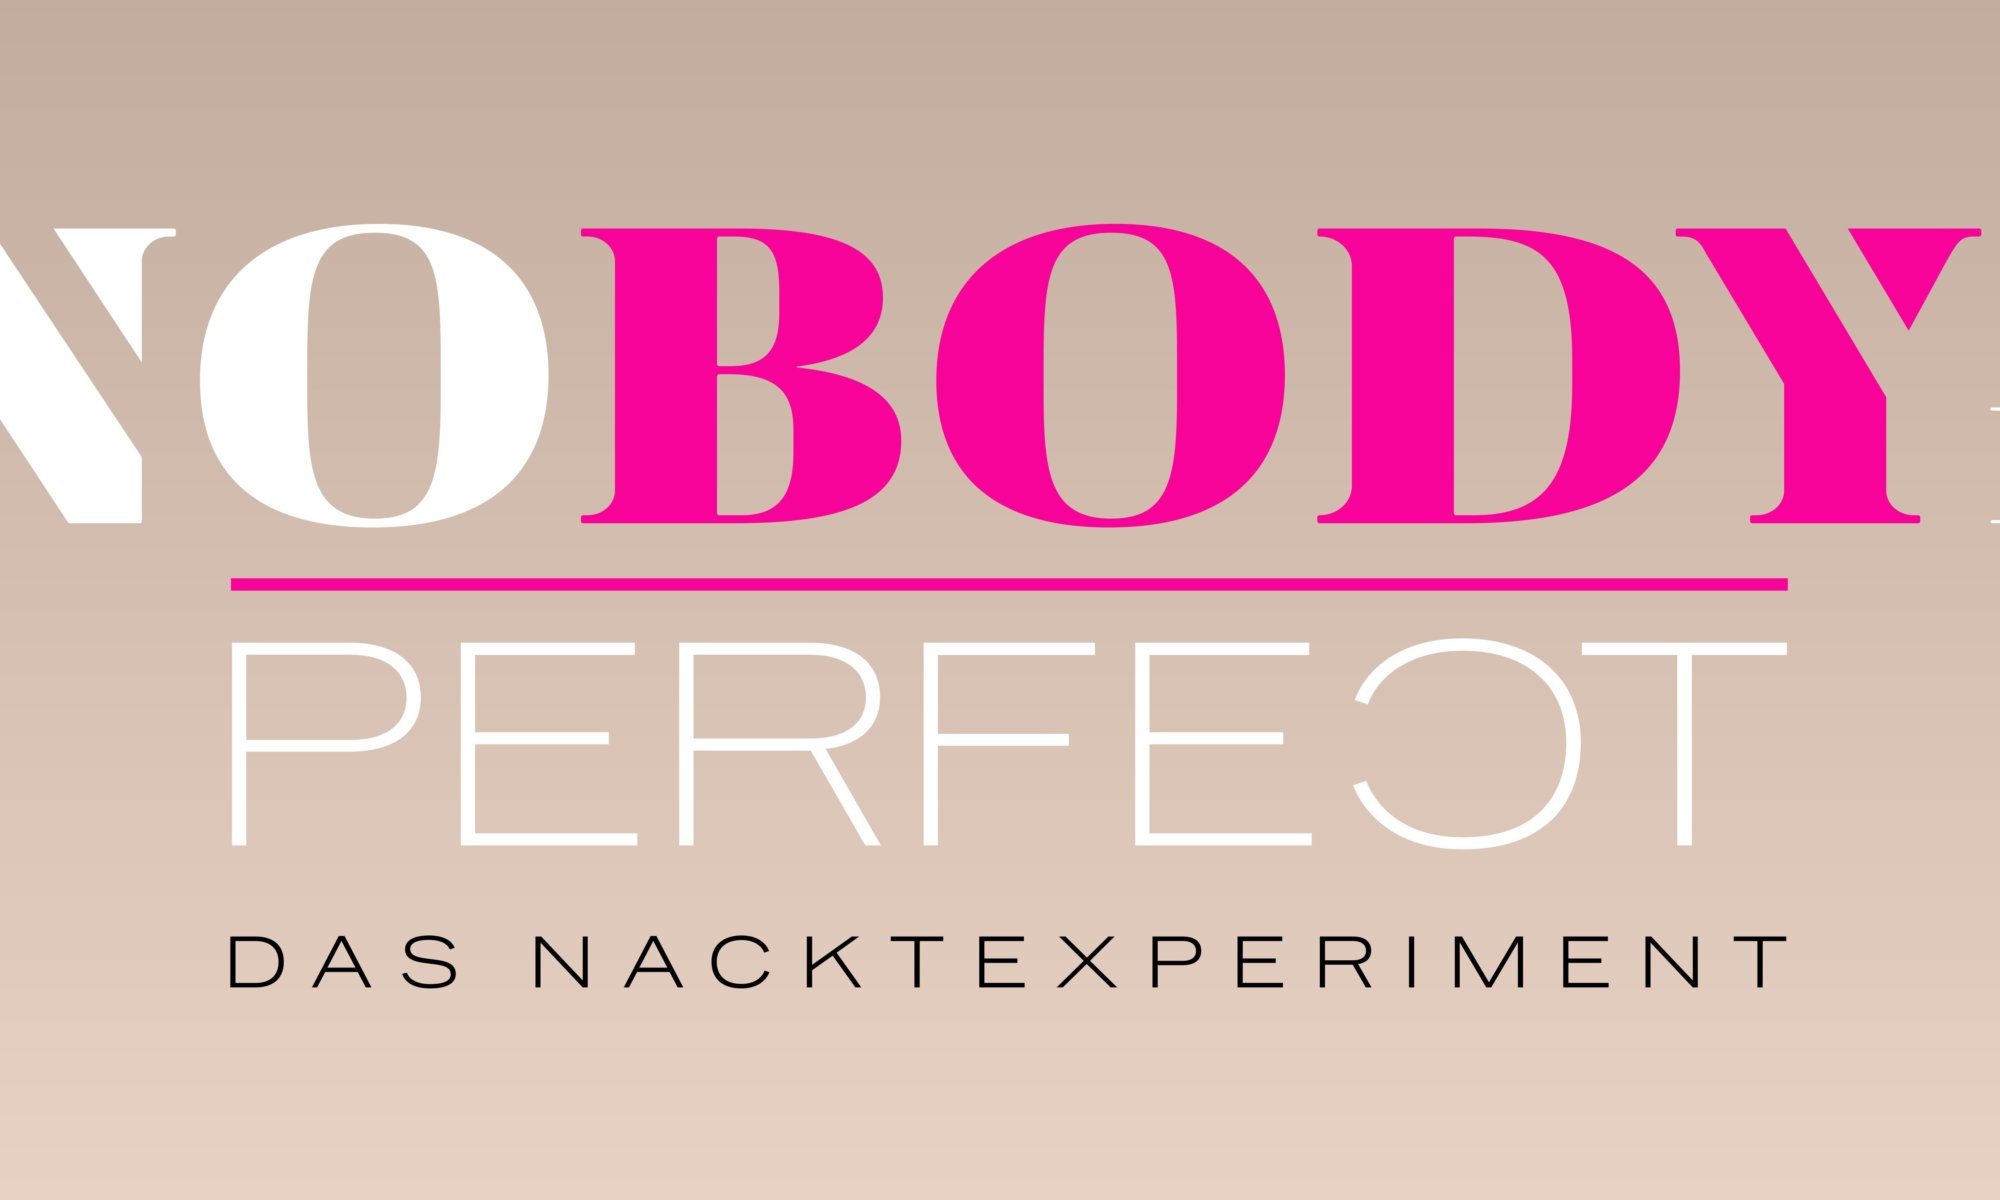 No Body is perfect – Das Nacktexperiment